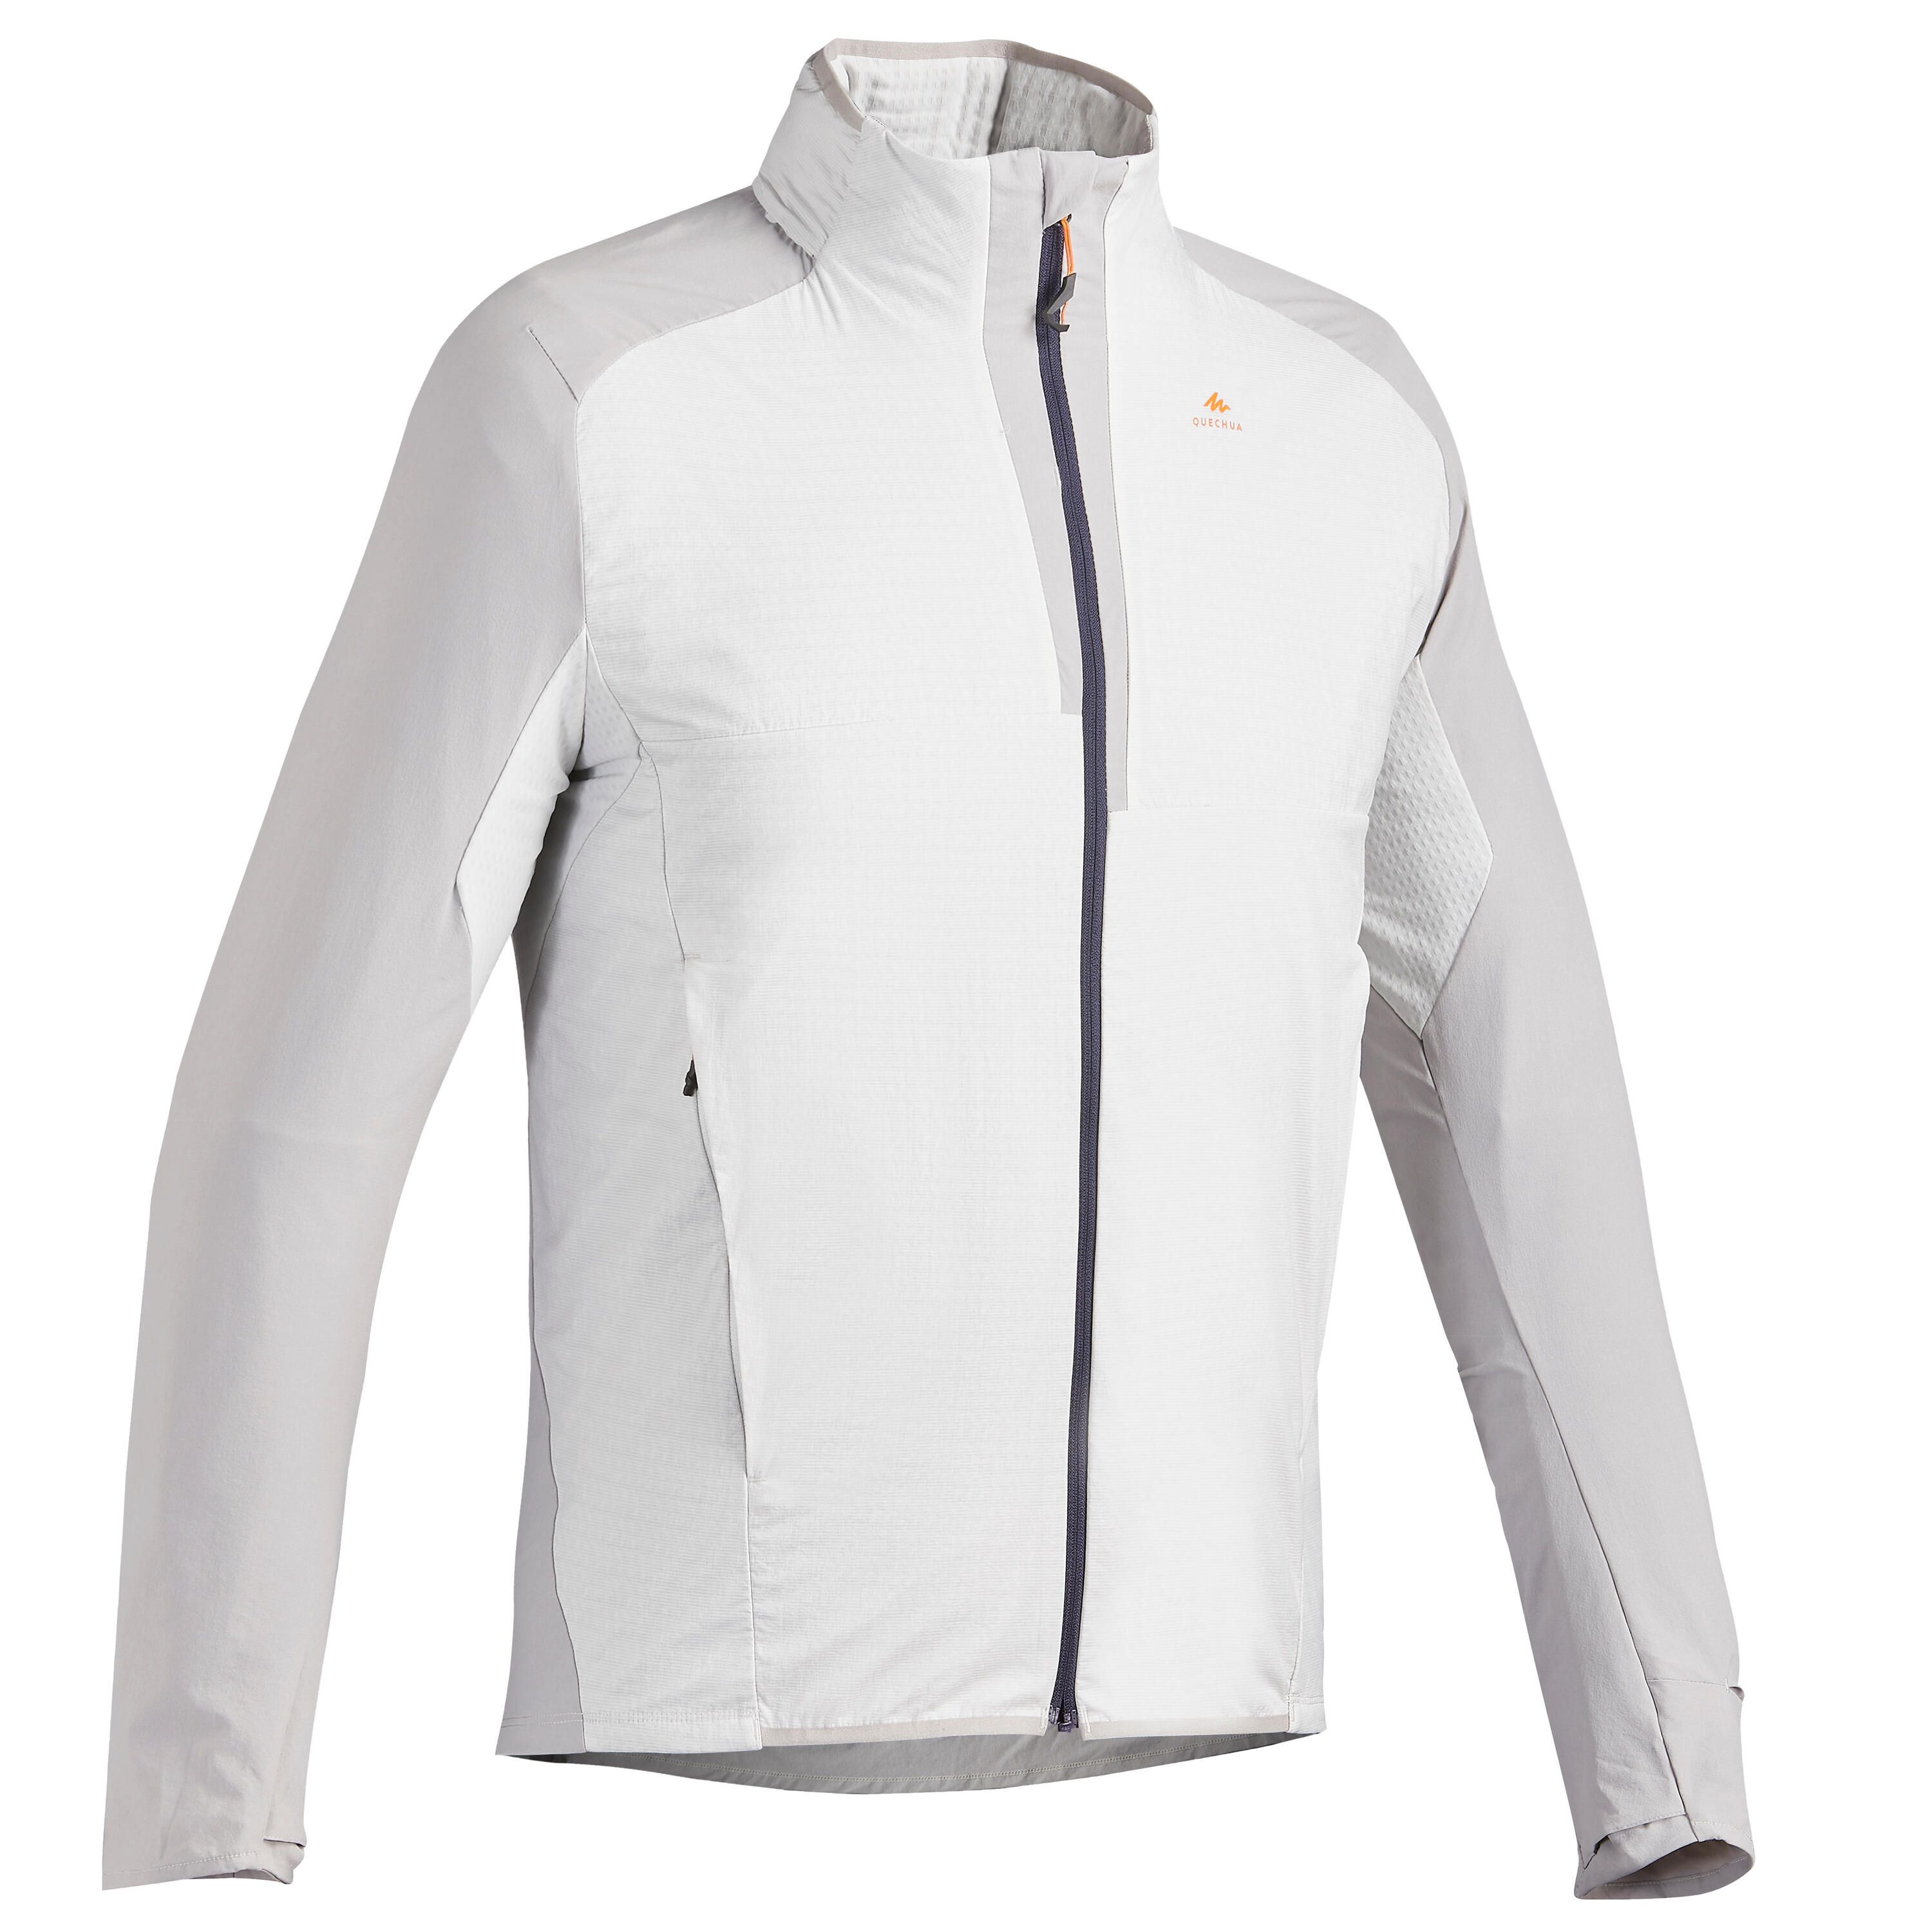 Men’s Warm Jacket For Fast Hiking FH 900 Hybrid - Light Grey 8/9